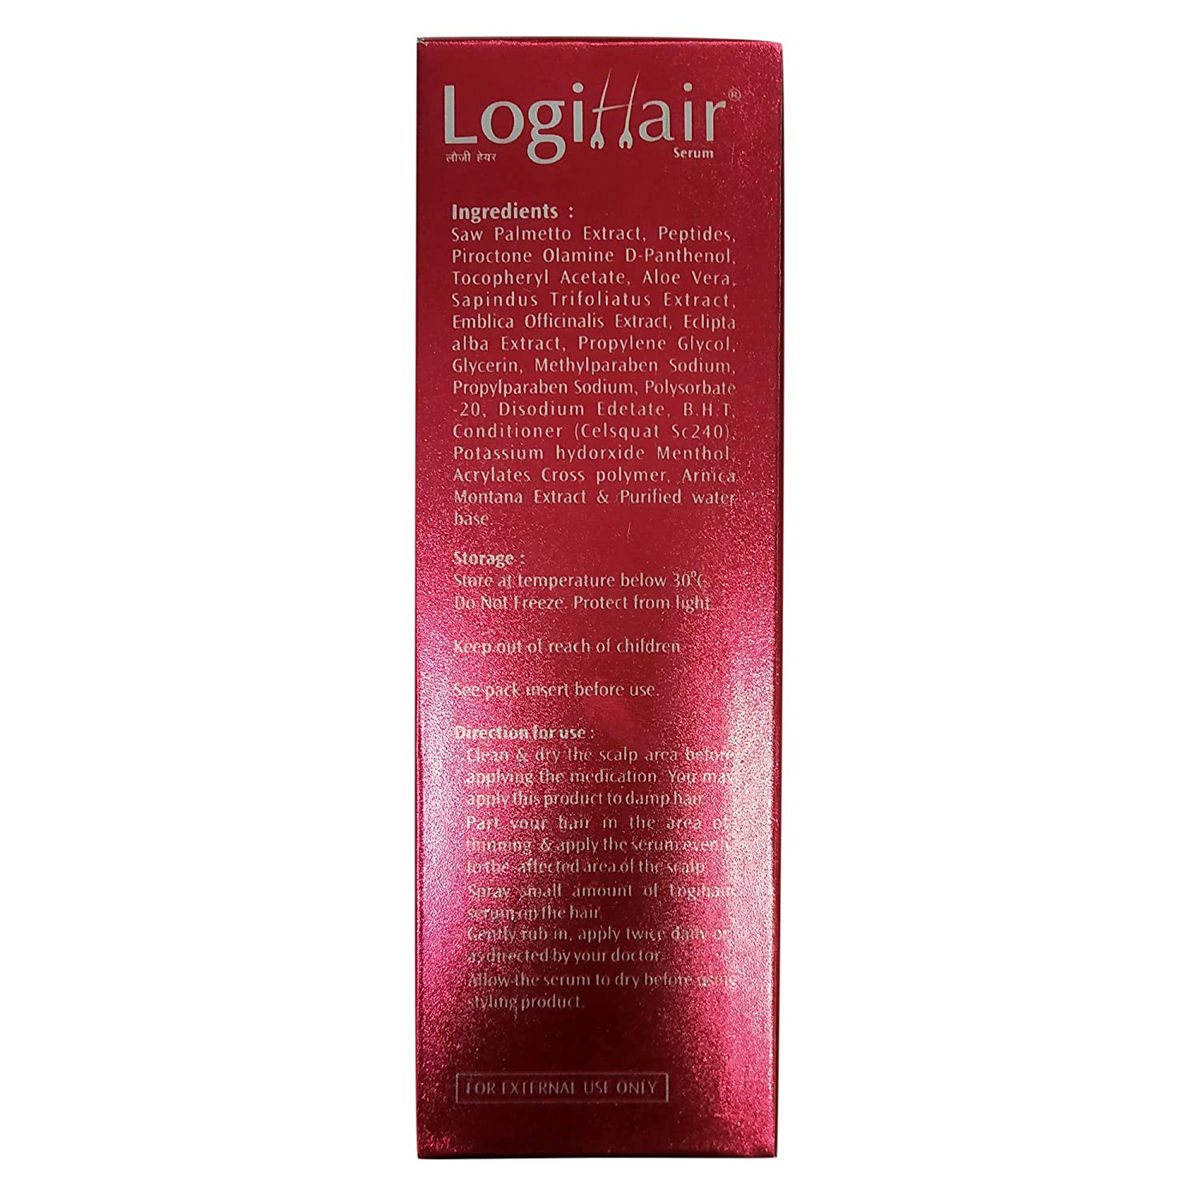 Logi Hair Serum, 126 ml, Pack of 1 